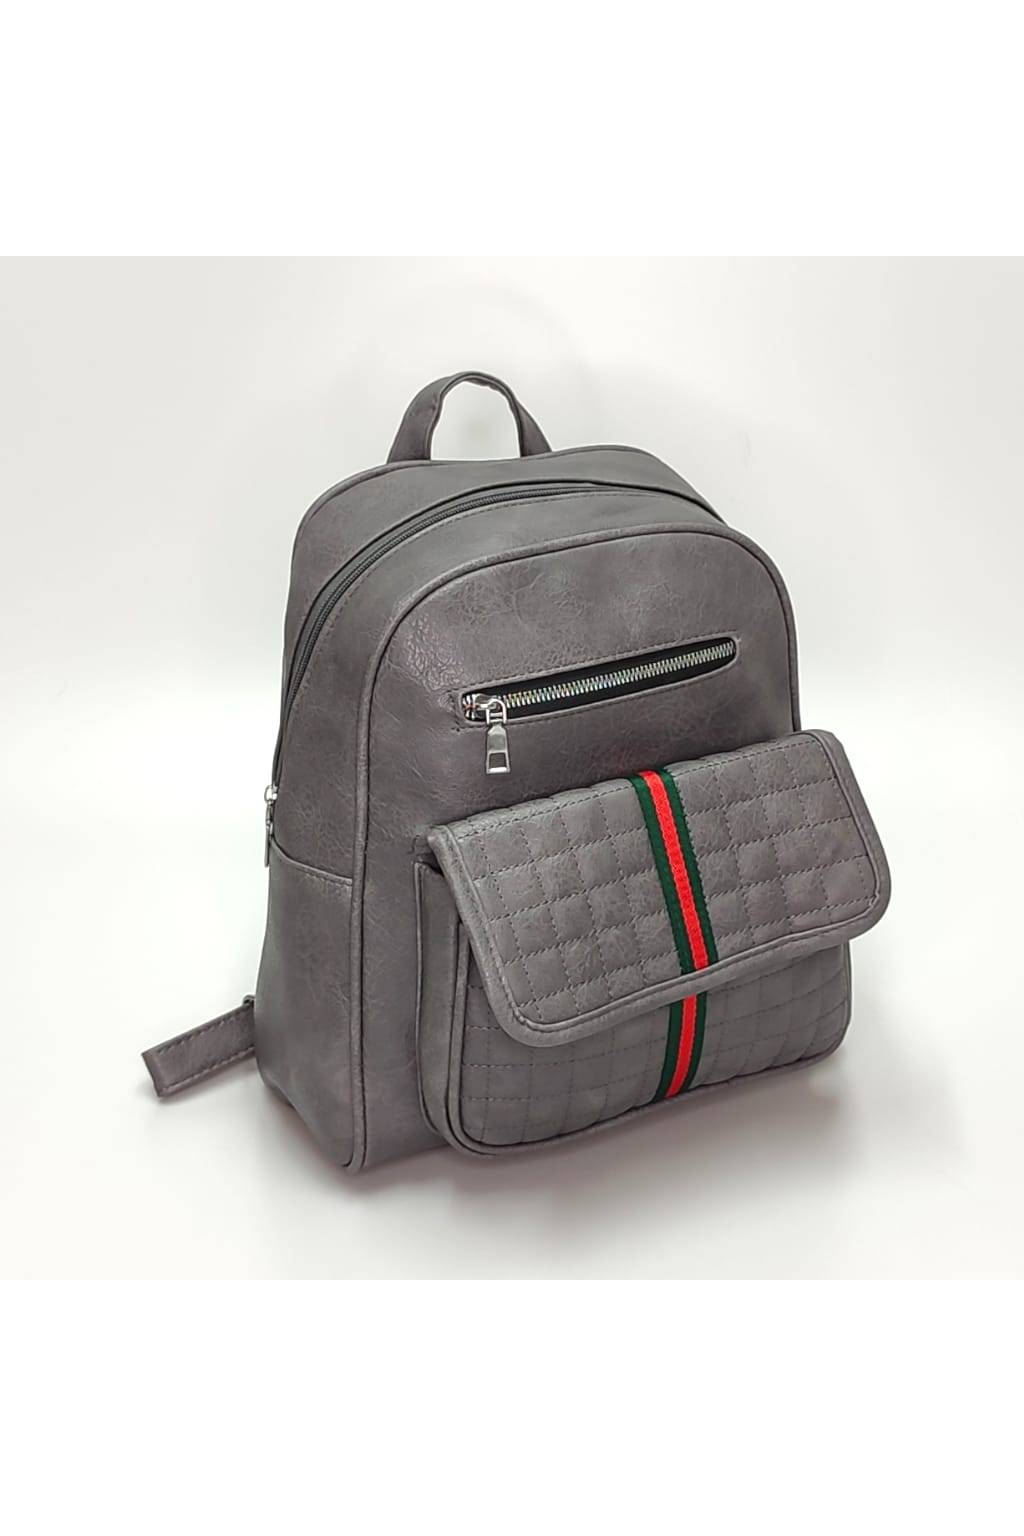 Dámsky ruksak 2571 tmavo sivý www.kabelky vypredaj (2)